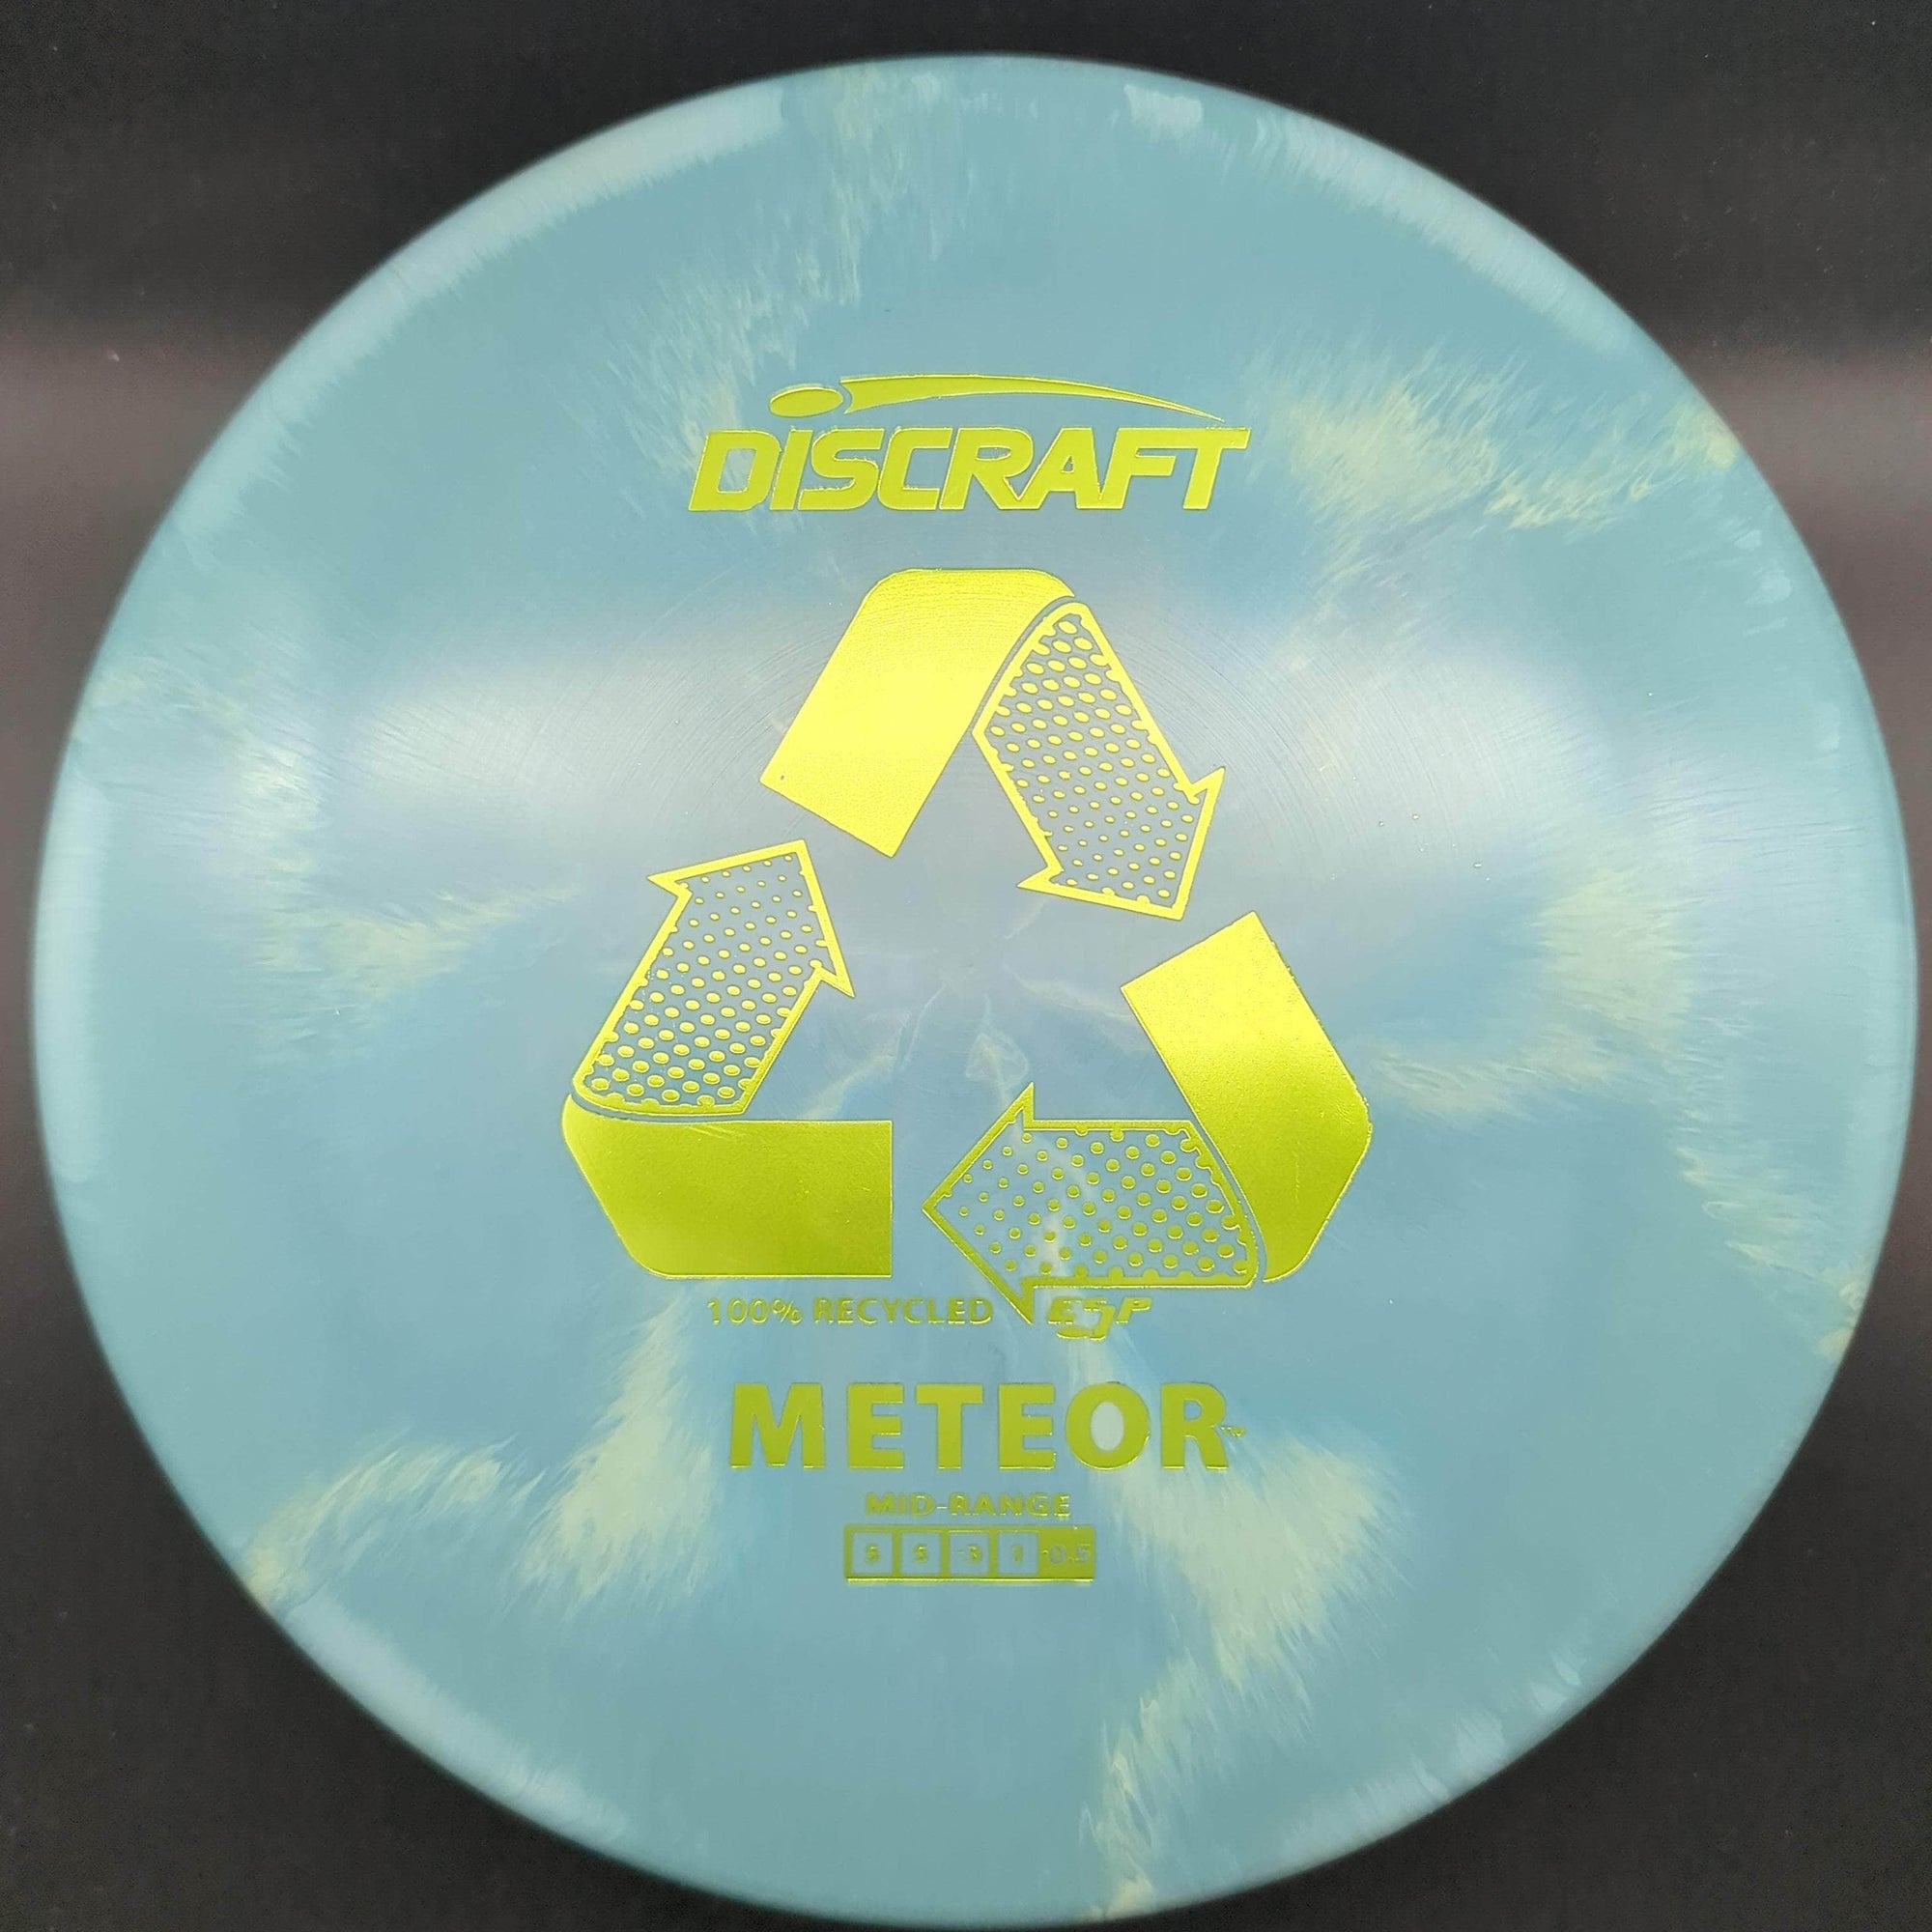 Discraft Mid Range Meteor, 100% Recycled ESP